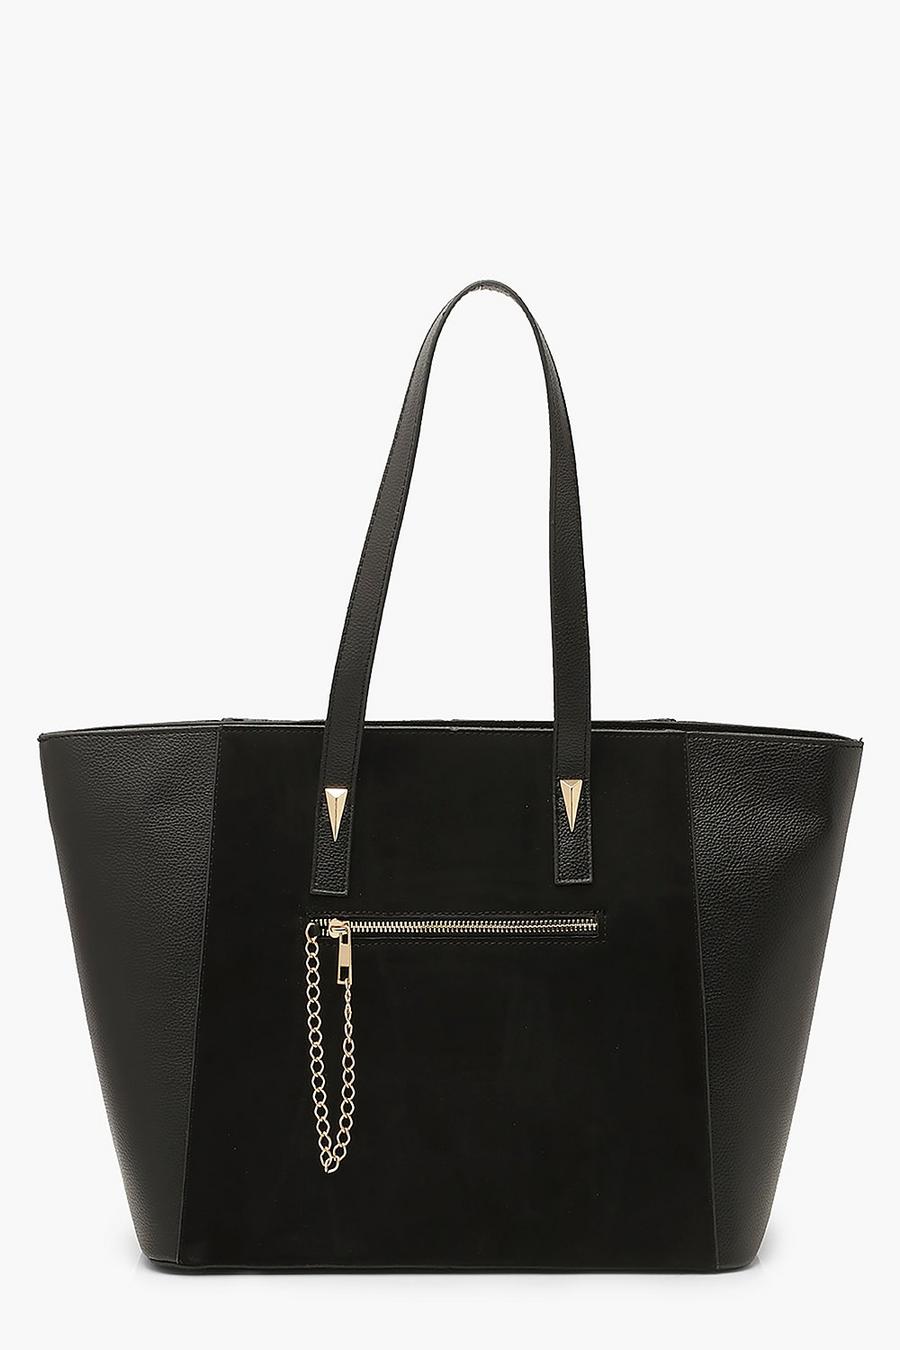 Black Suedette & PU Tote Bag With Chain Trim Detail